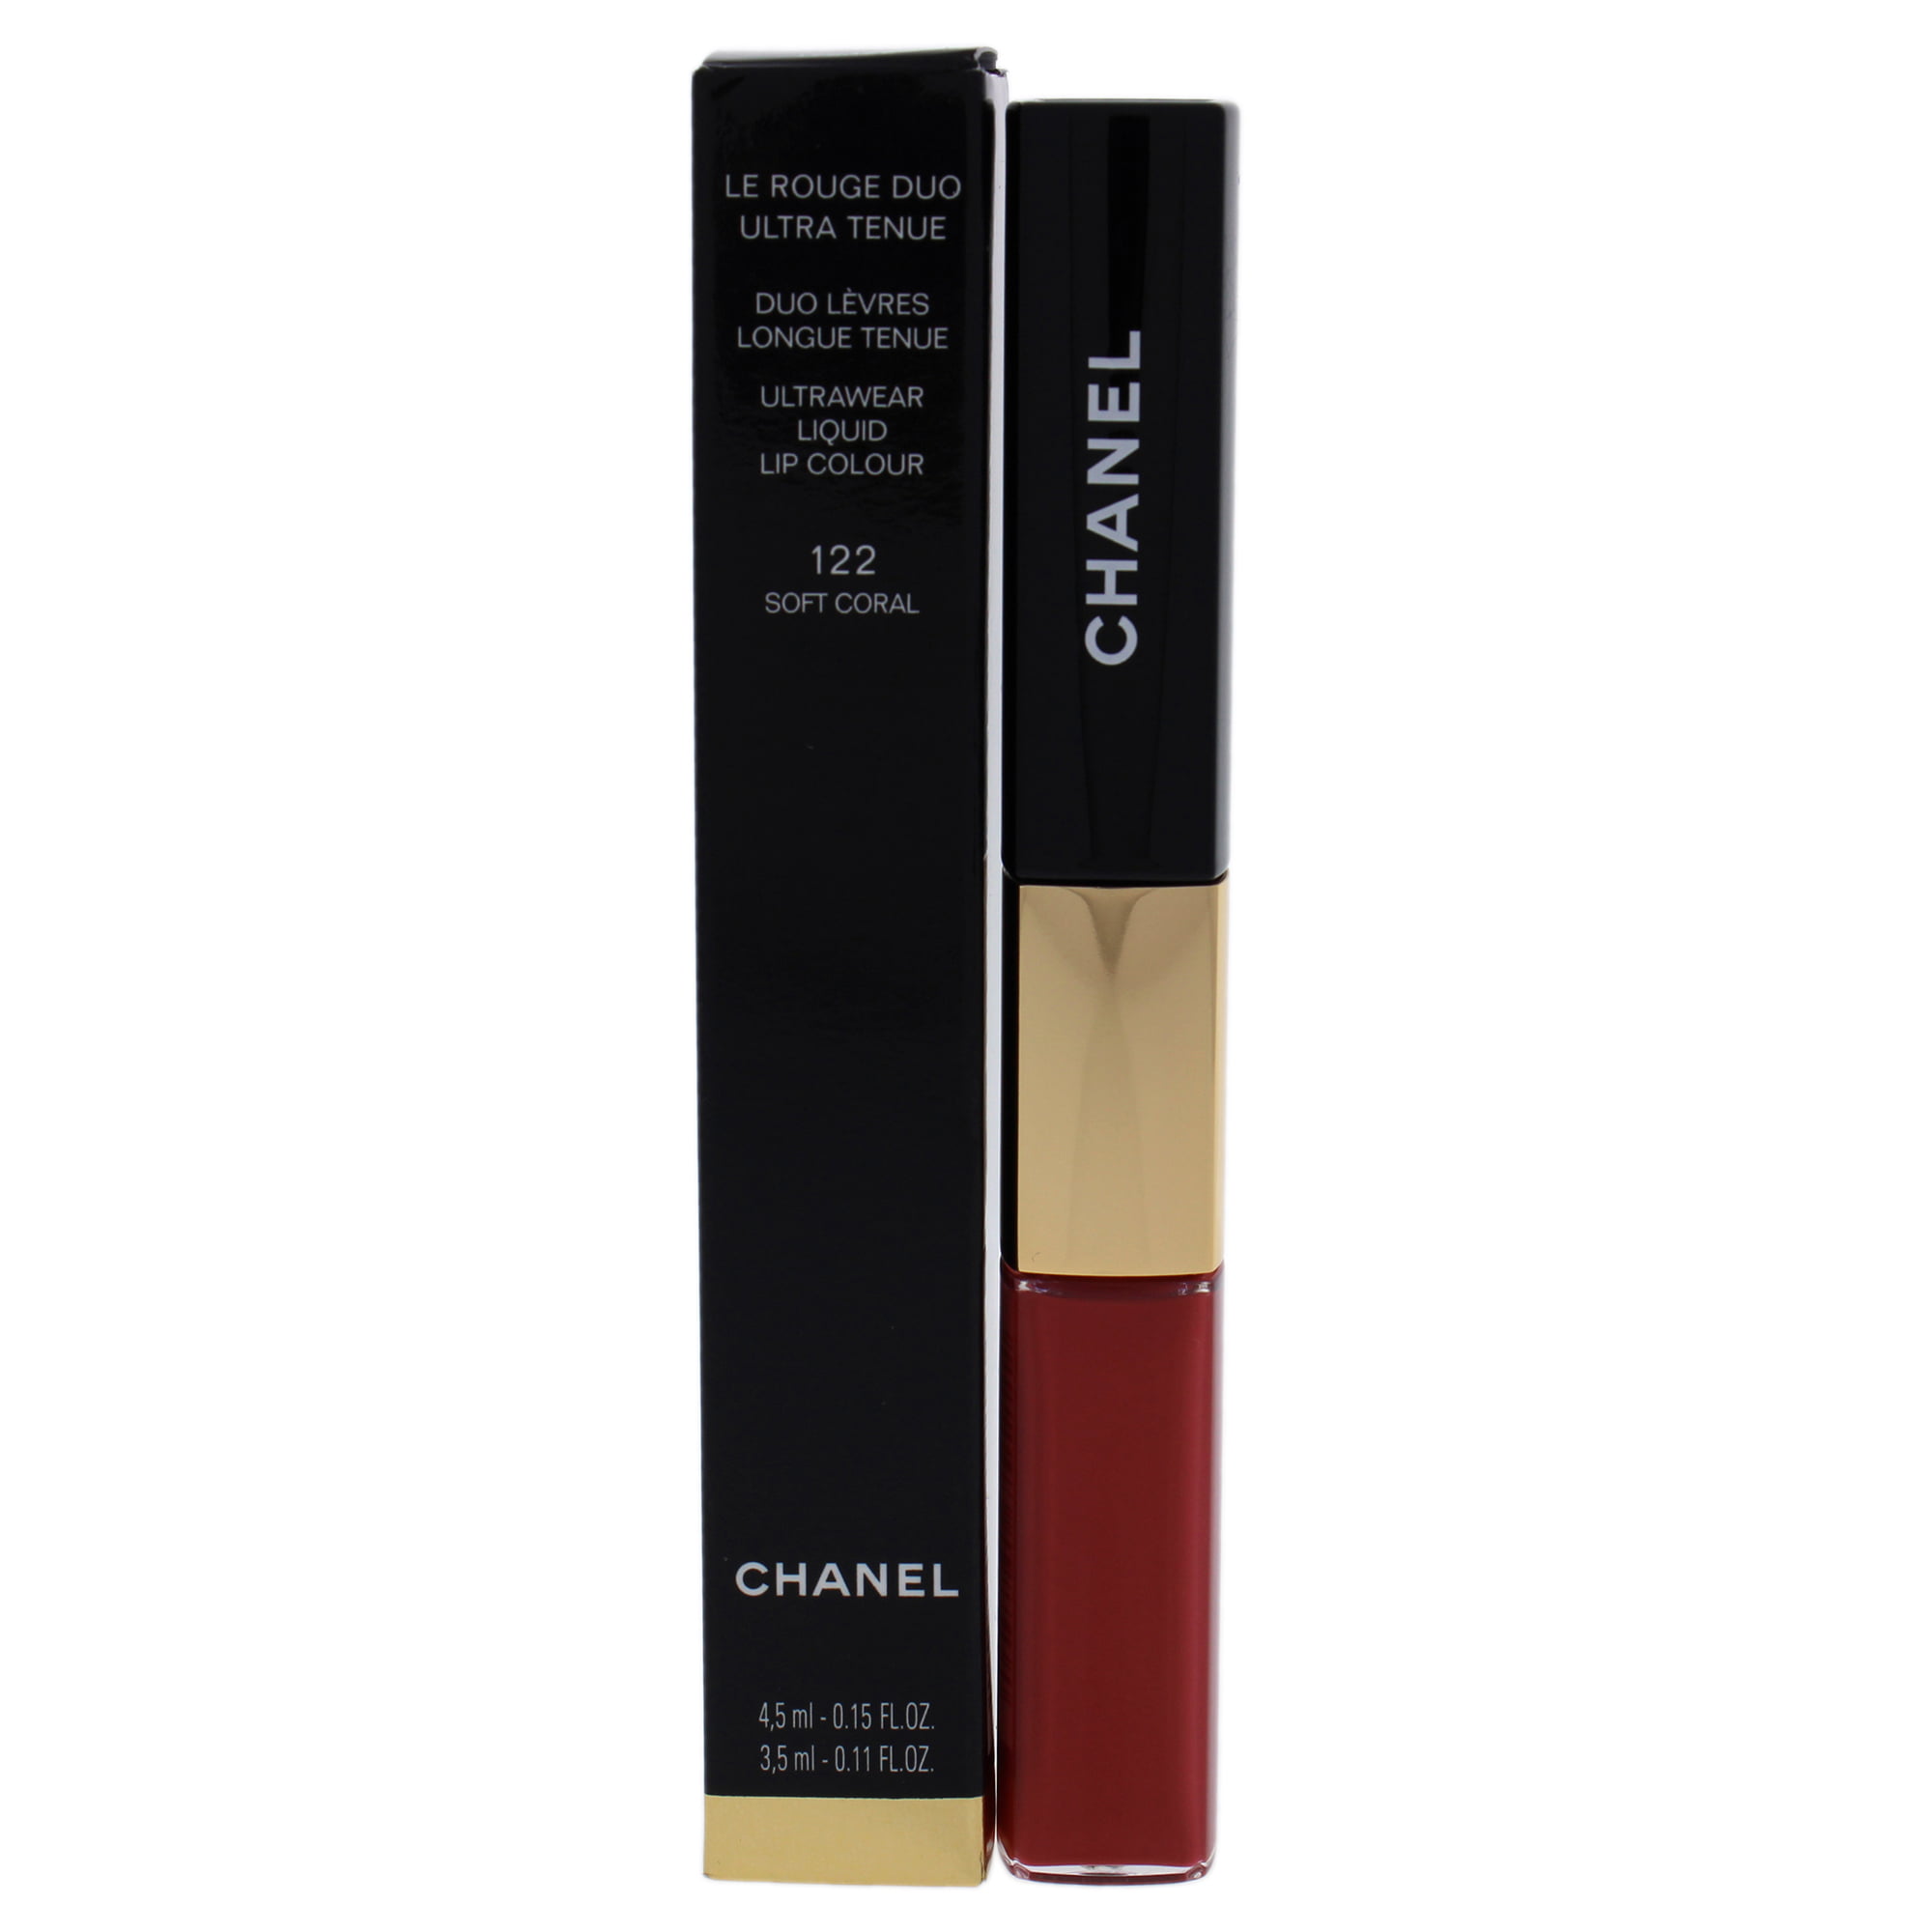 Le Rouge Duo Ultra Tenue Ultra Wear Liquid Lip Colour - 122 Soft Coral by  Chanel for Women - 0.26 oz Lipstick 